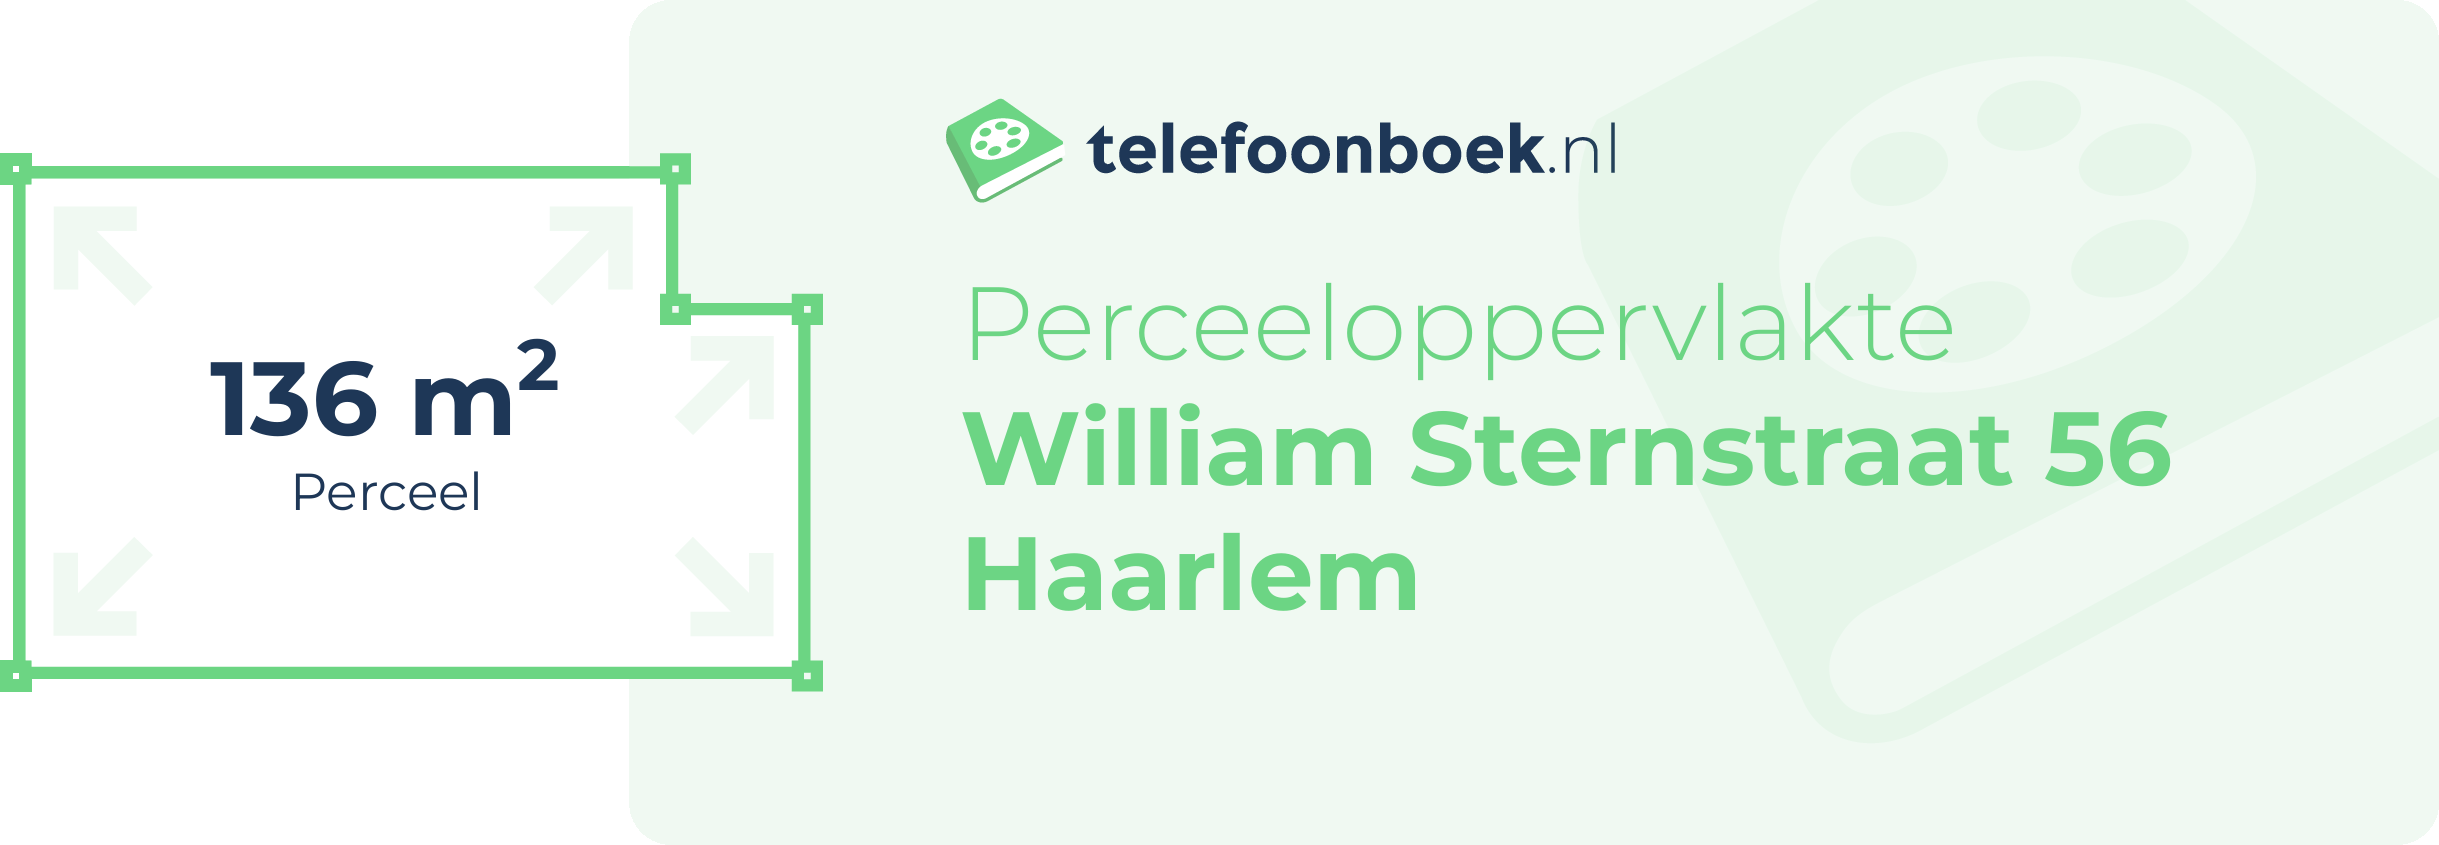 Perceeloppervlakte William Sternstraat 56 Haarlem